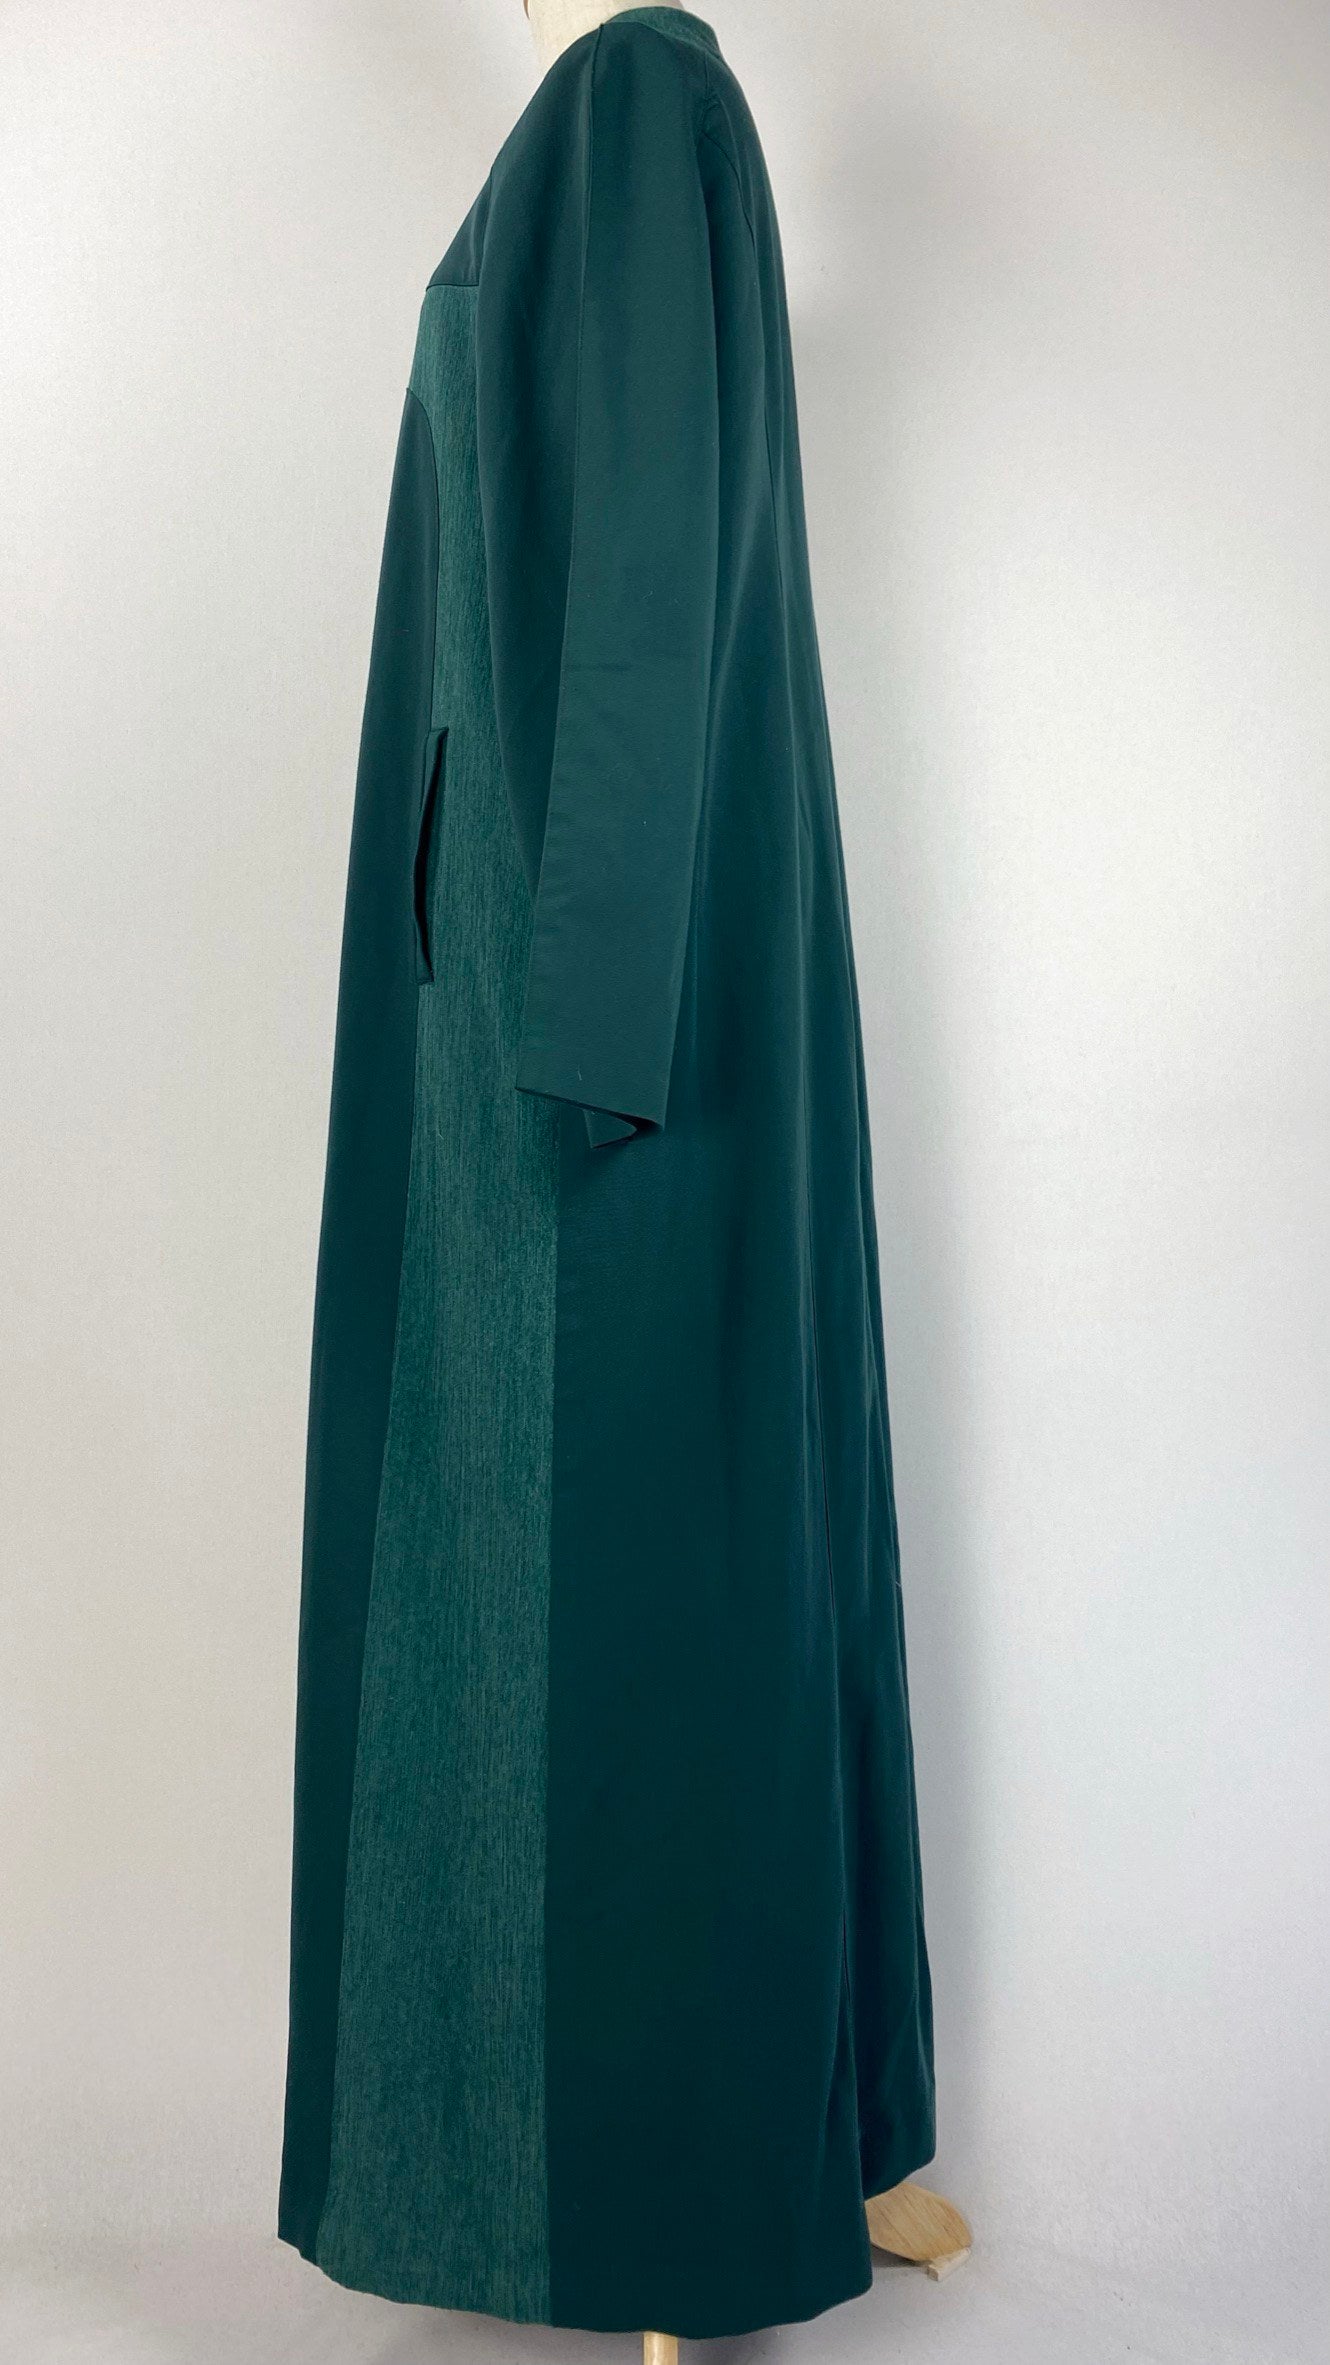 Long Sleeve Zip Up Abaya, Green